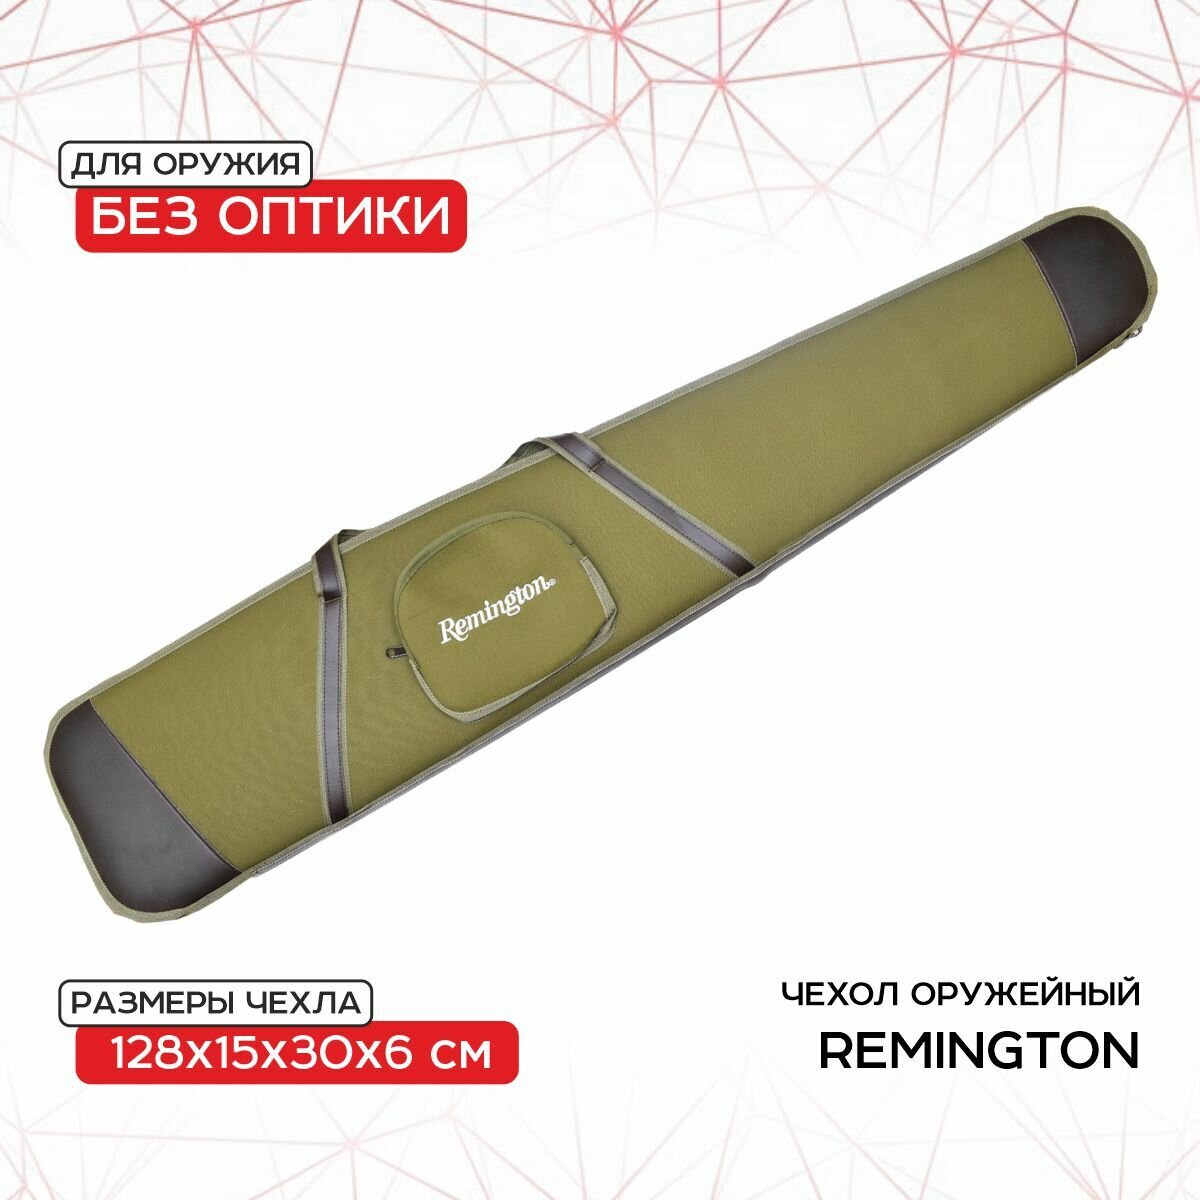 Чехол оружейный Remington без оптики 128х15х30х6 (зеленый) GB-9050B128